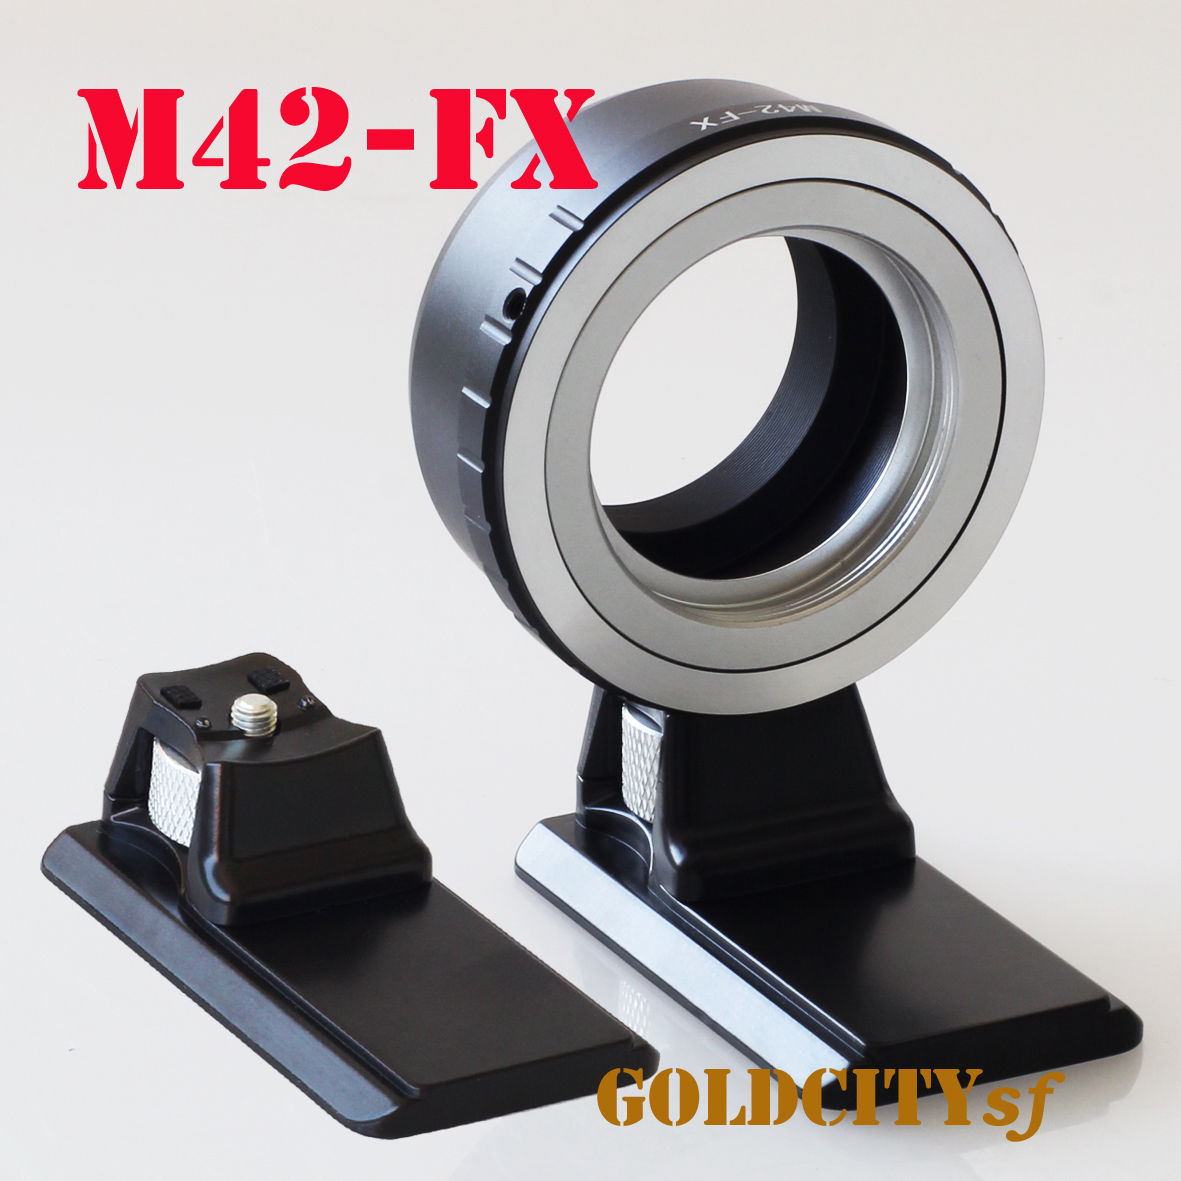 M42 42          Fujifilm fuji FX X X-E2/X-E1/X-Pro1/X-M1/X-A2/X-A1/X-T1 xpro2 